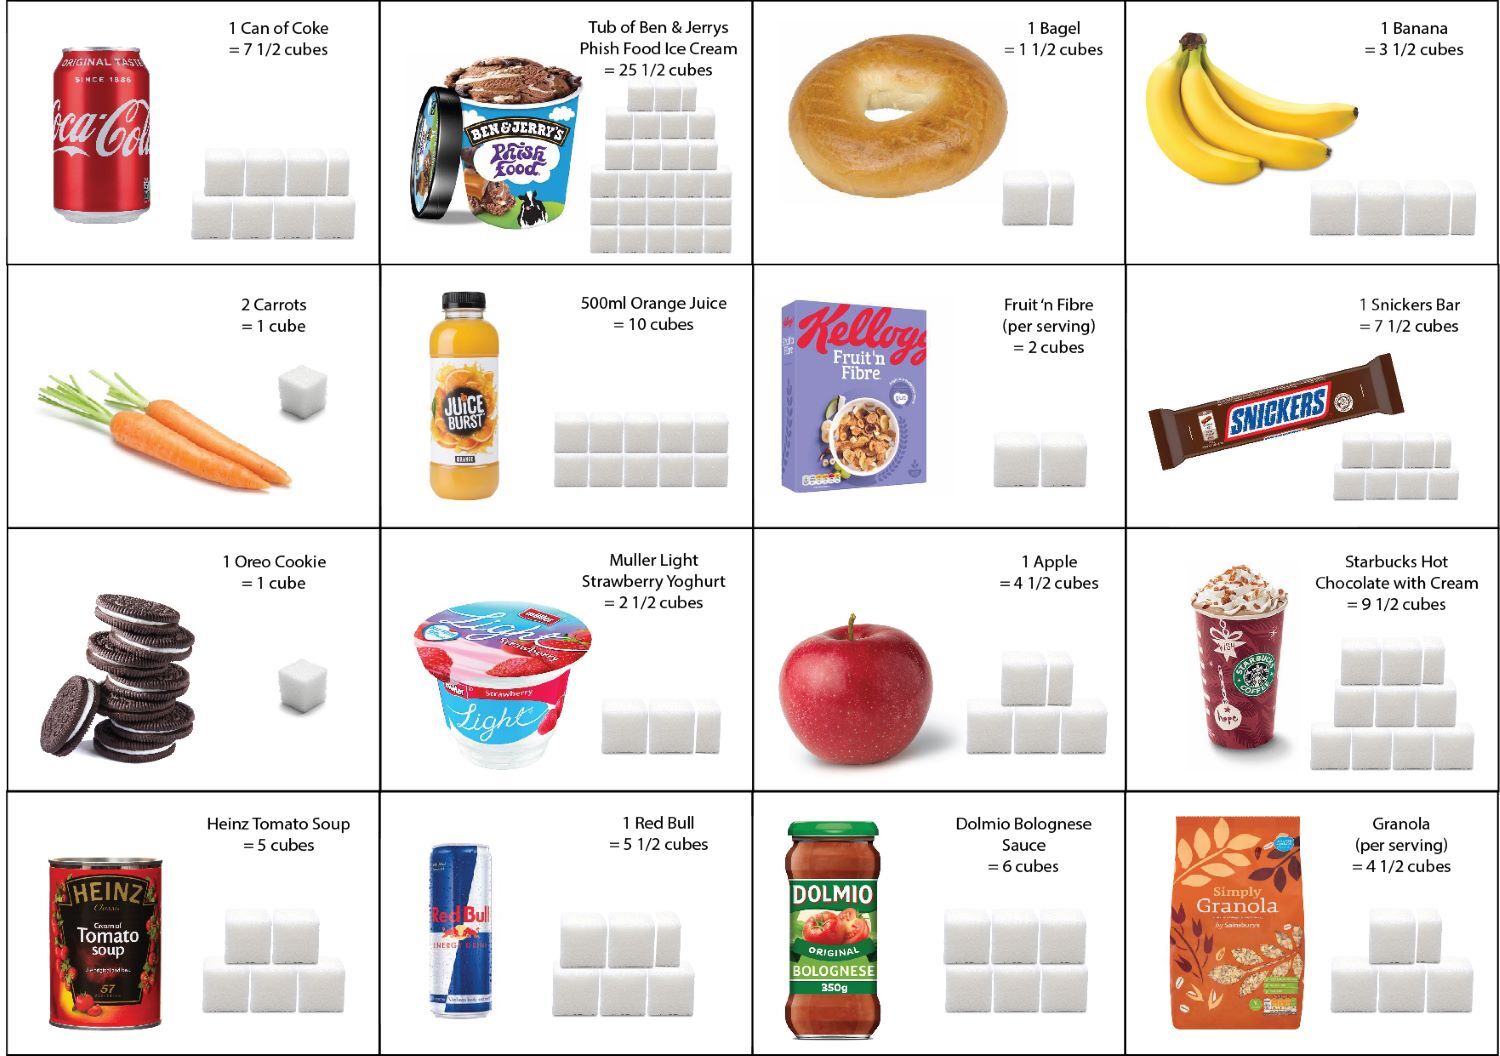 Sugar per food item chart